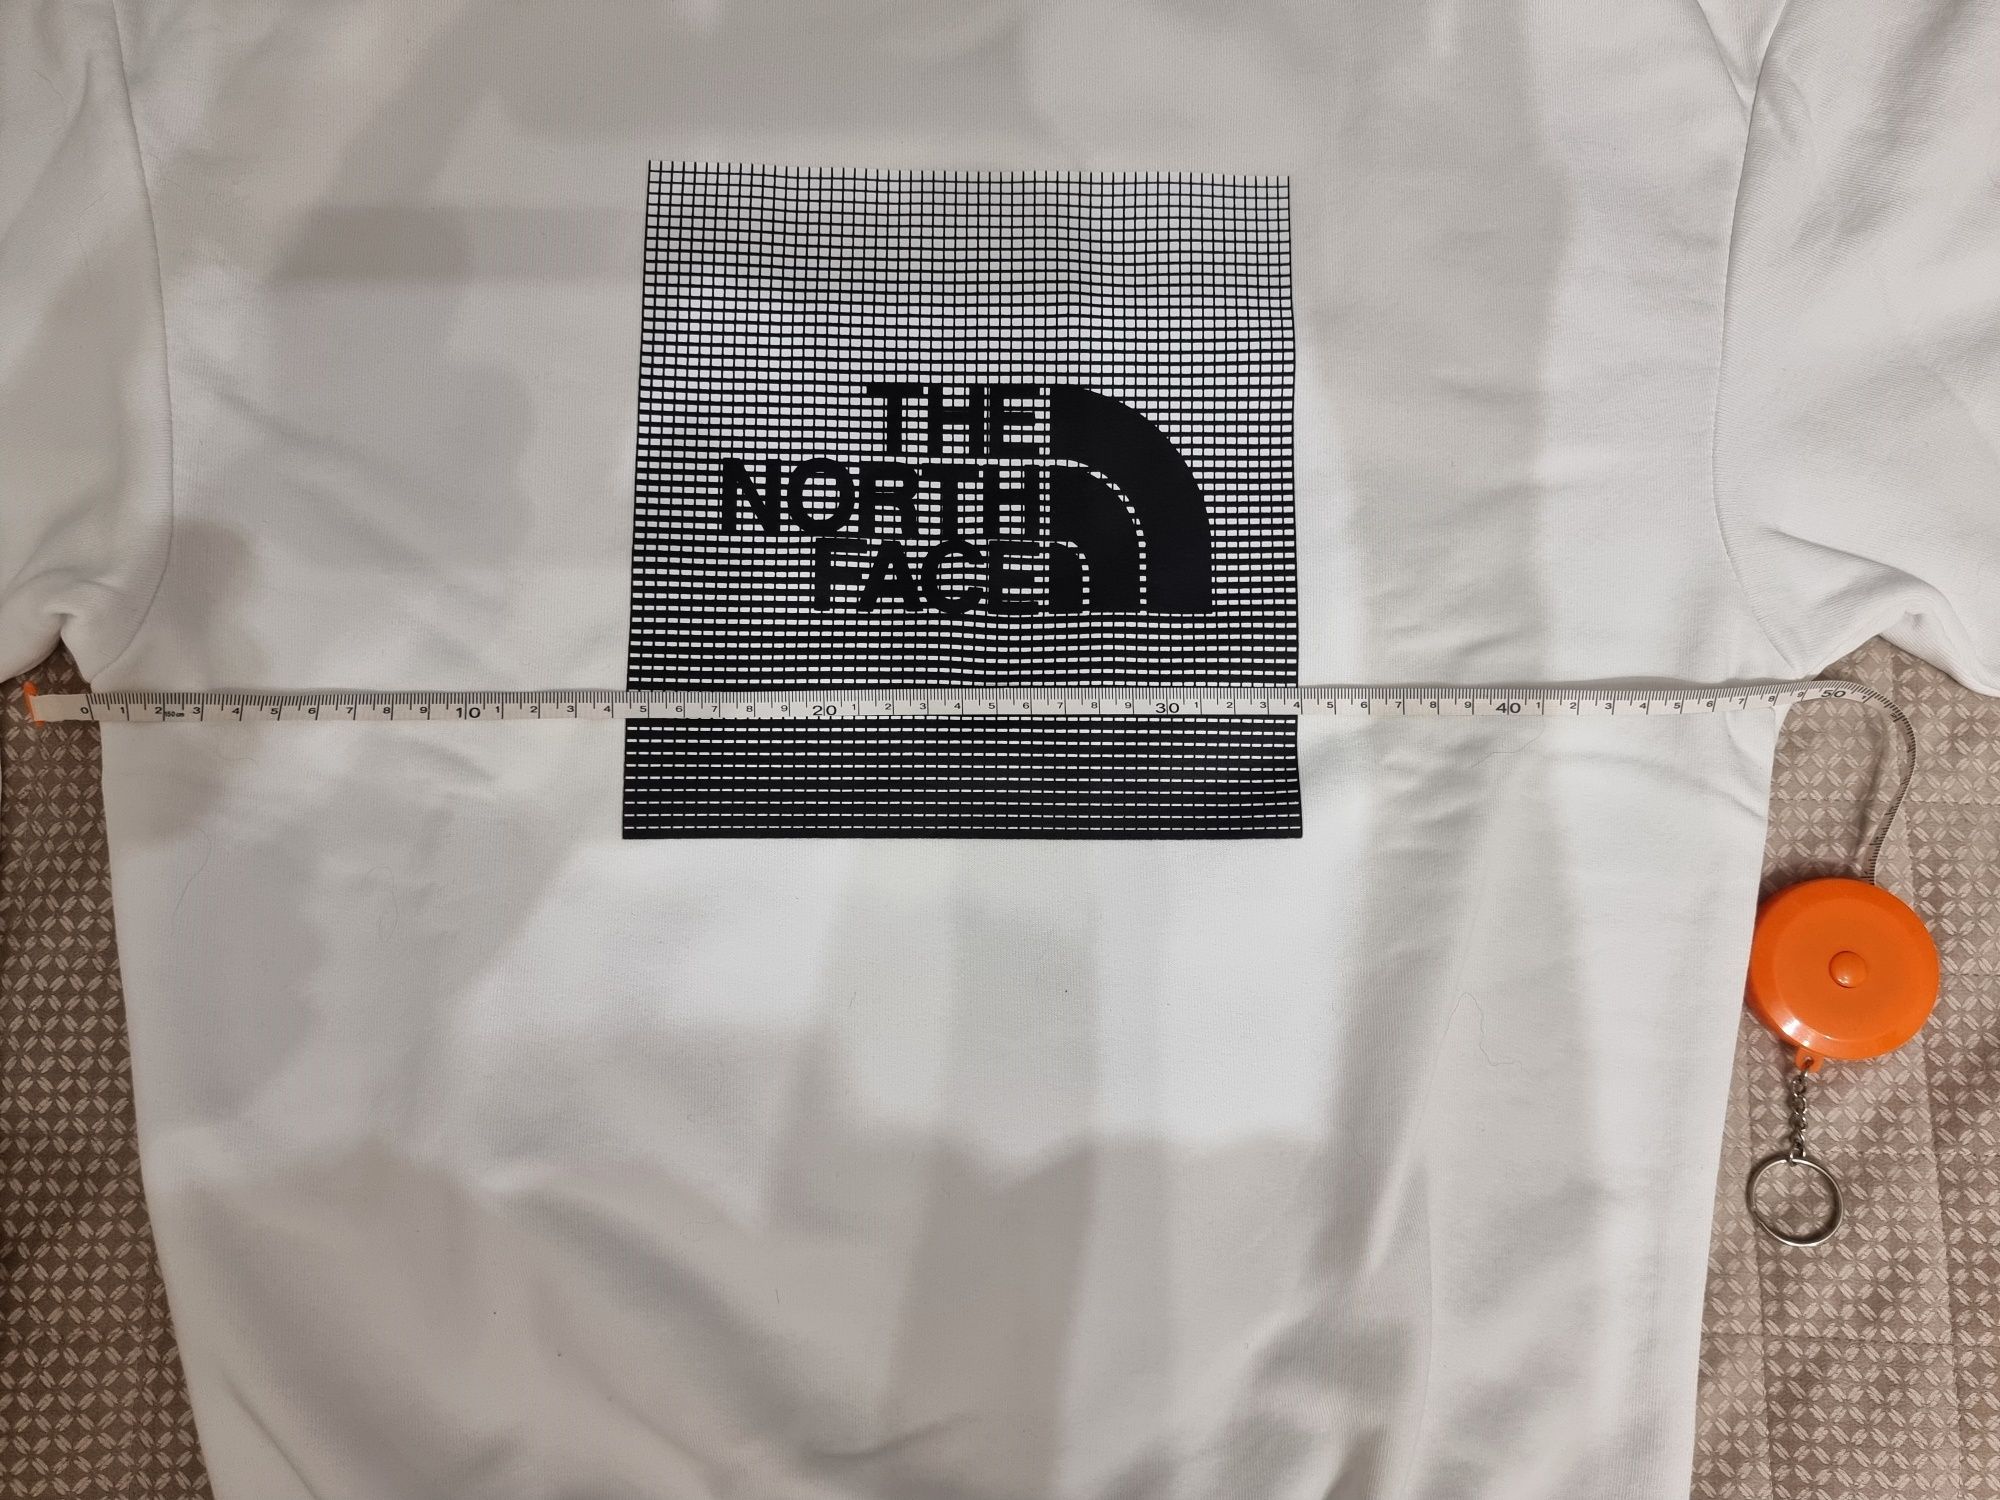 Bluza Nike biała sportowa damska The north face xs